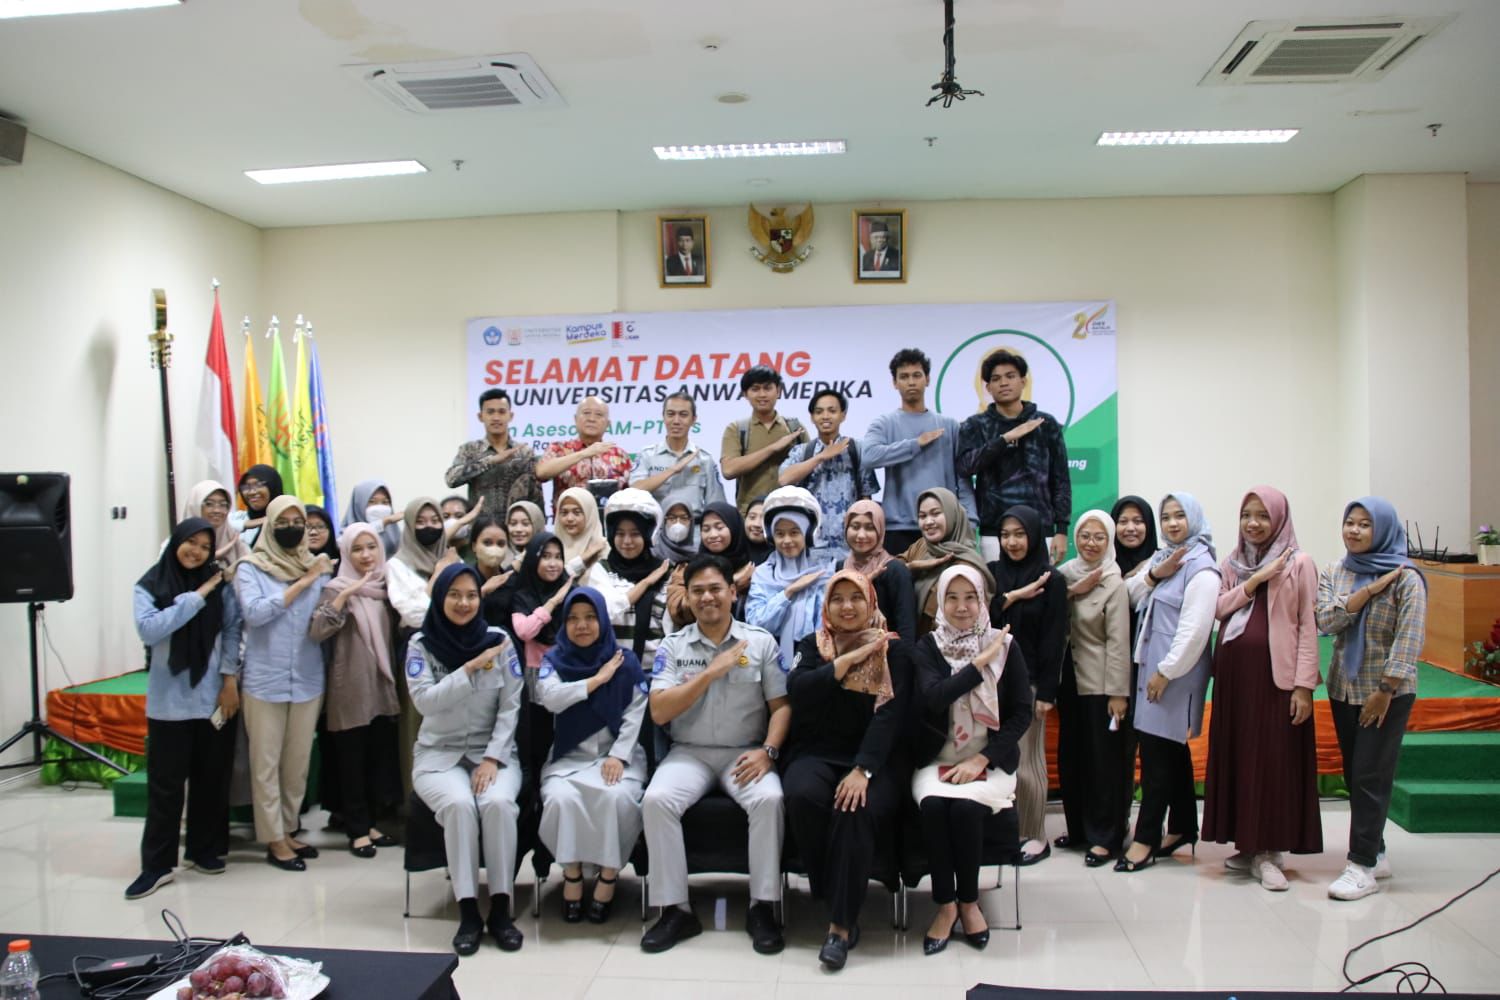 PT Jasa Raharja Cabang Utama Jawa Timur mengajar Bersama Universitas Anwar Medika Krian